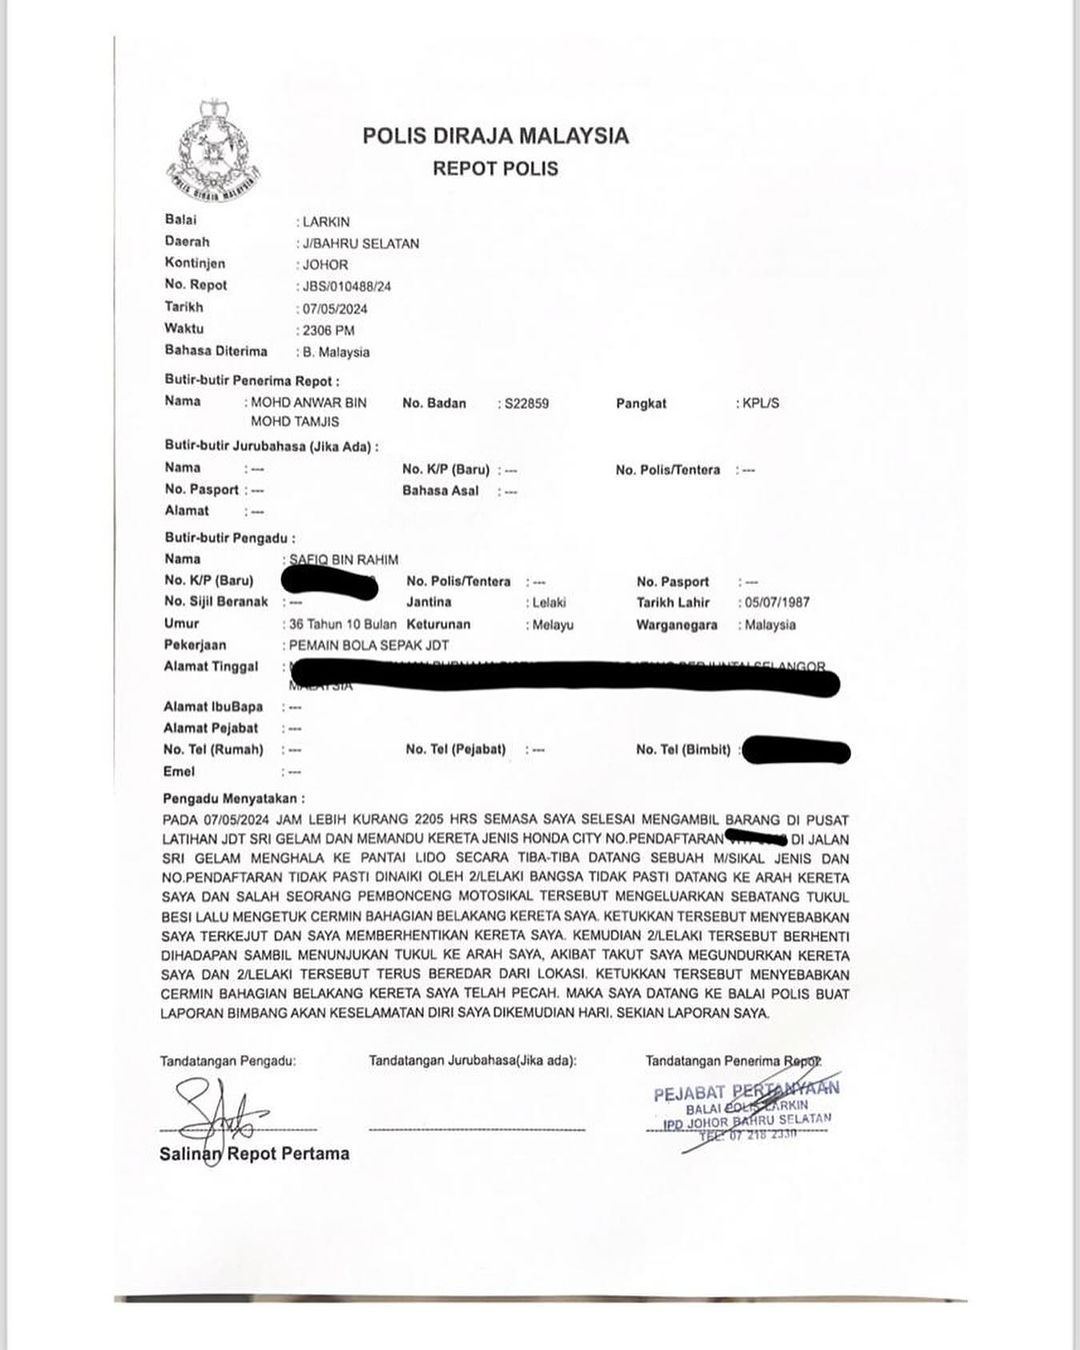 Safiq rahim's police report